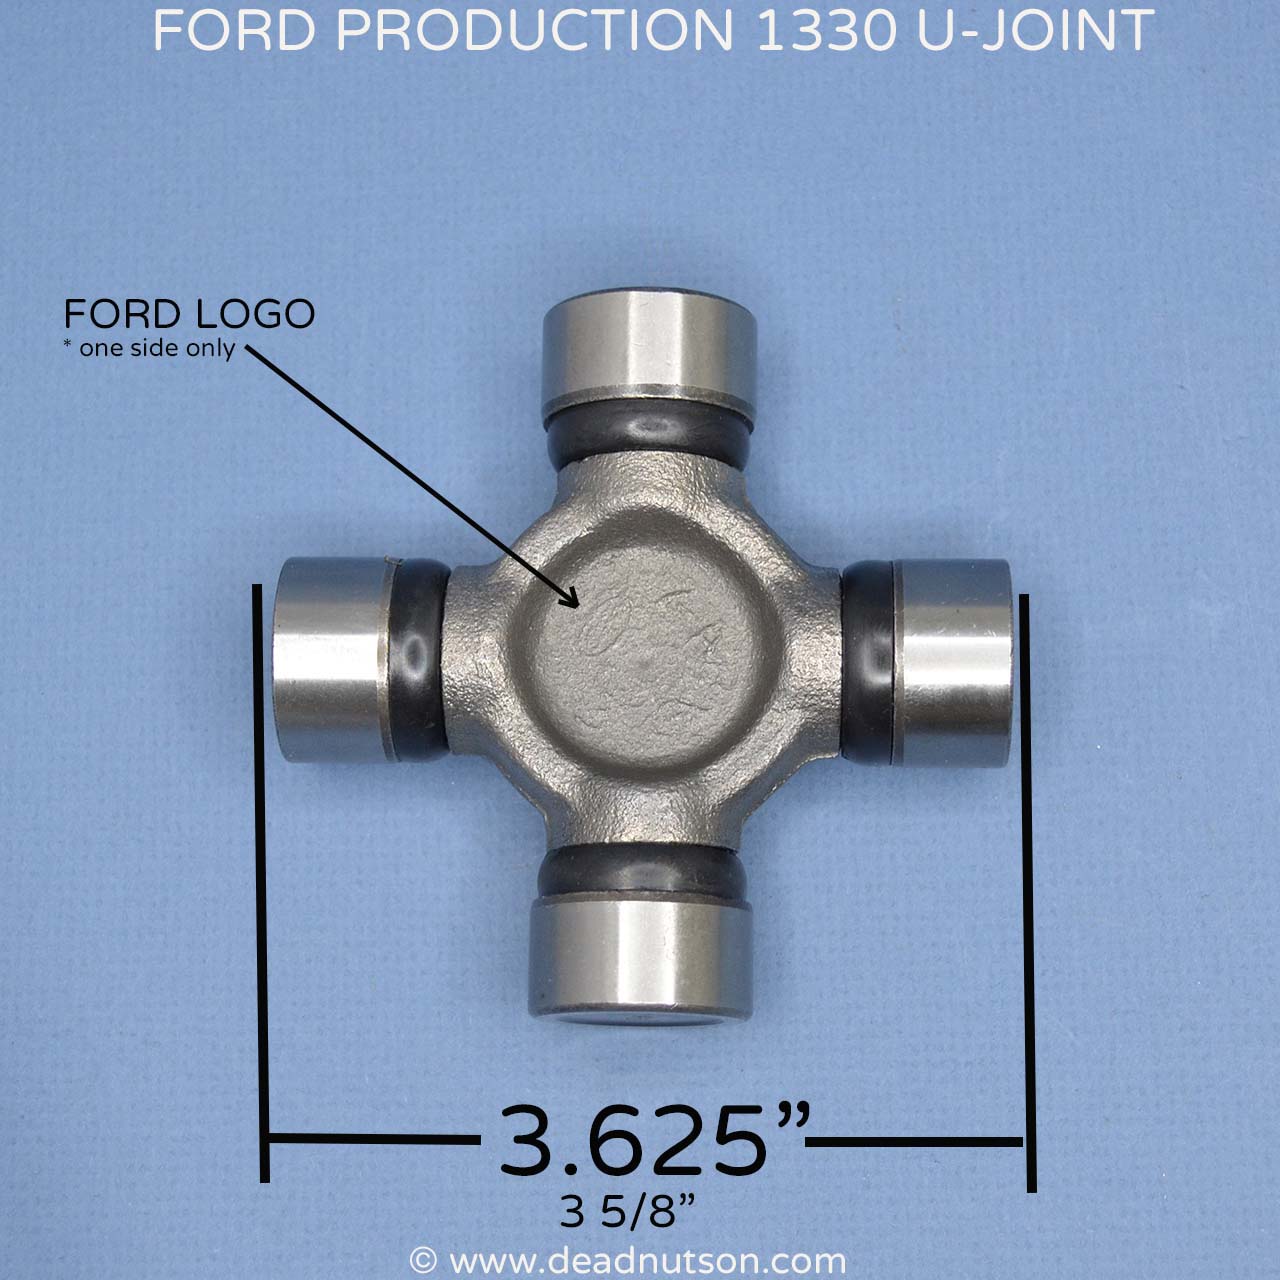 ford-zerkless-production-1330-u-joint-identification.jpg